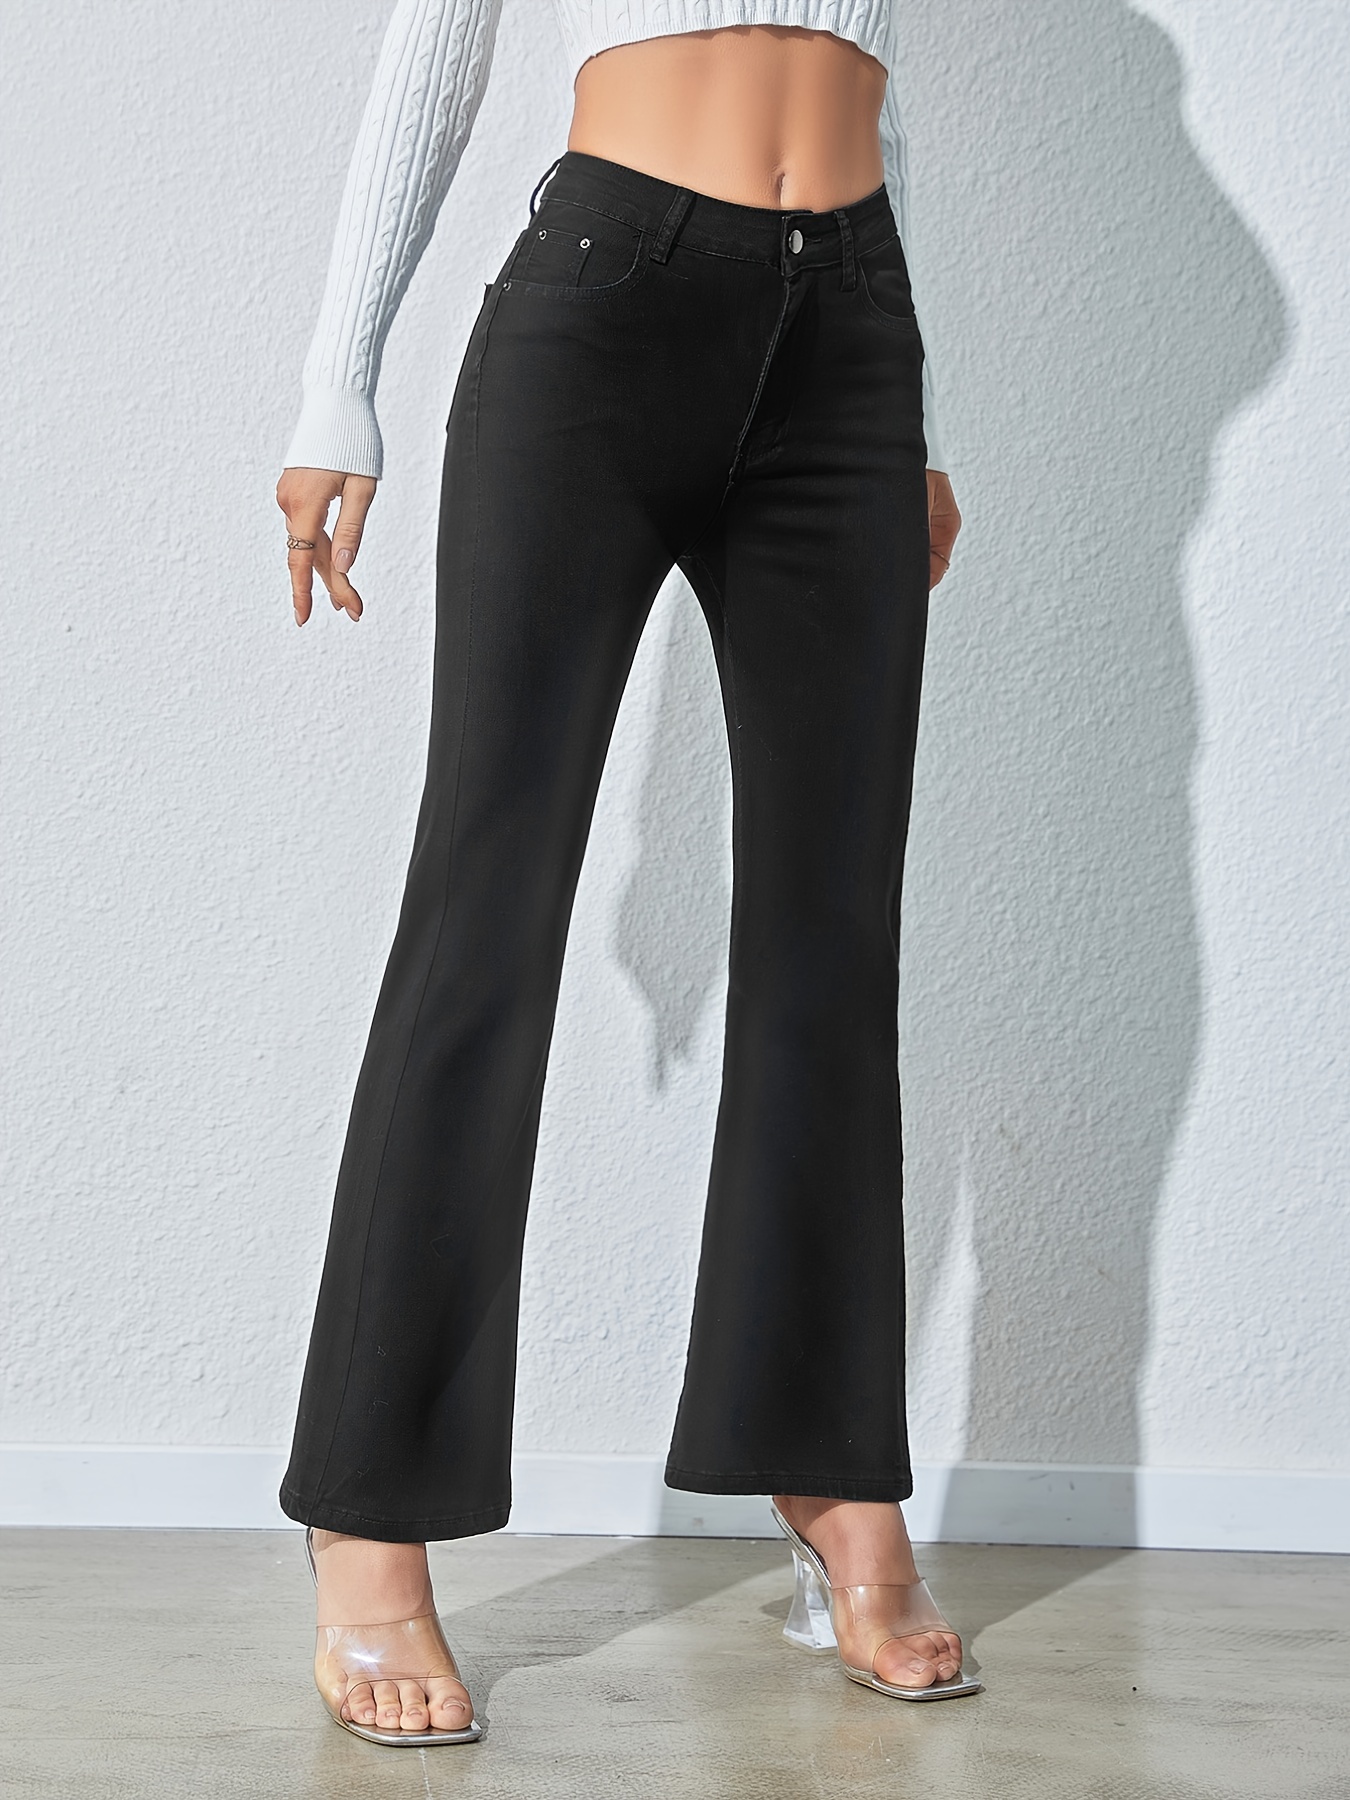 High * High Stretchy Bell Bottom Shape Plain Design Solid Color Black Flare  Jeans, Women's Denim Jeans, Women's Clothing